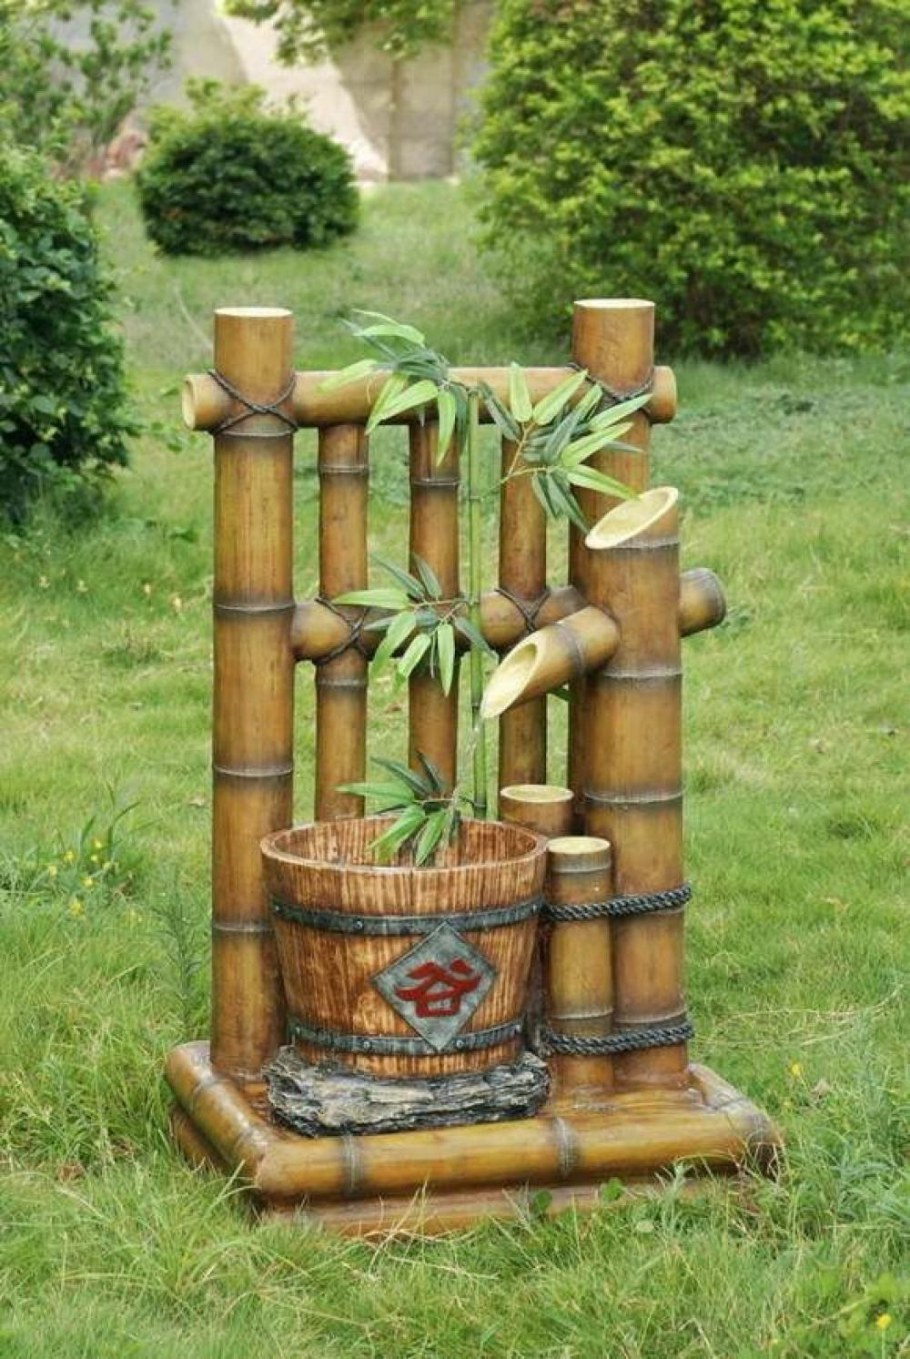 Предметы интерьера из бамбука